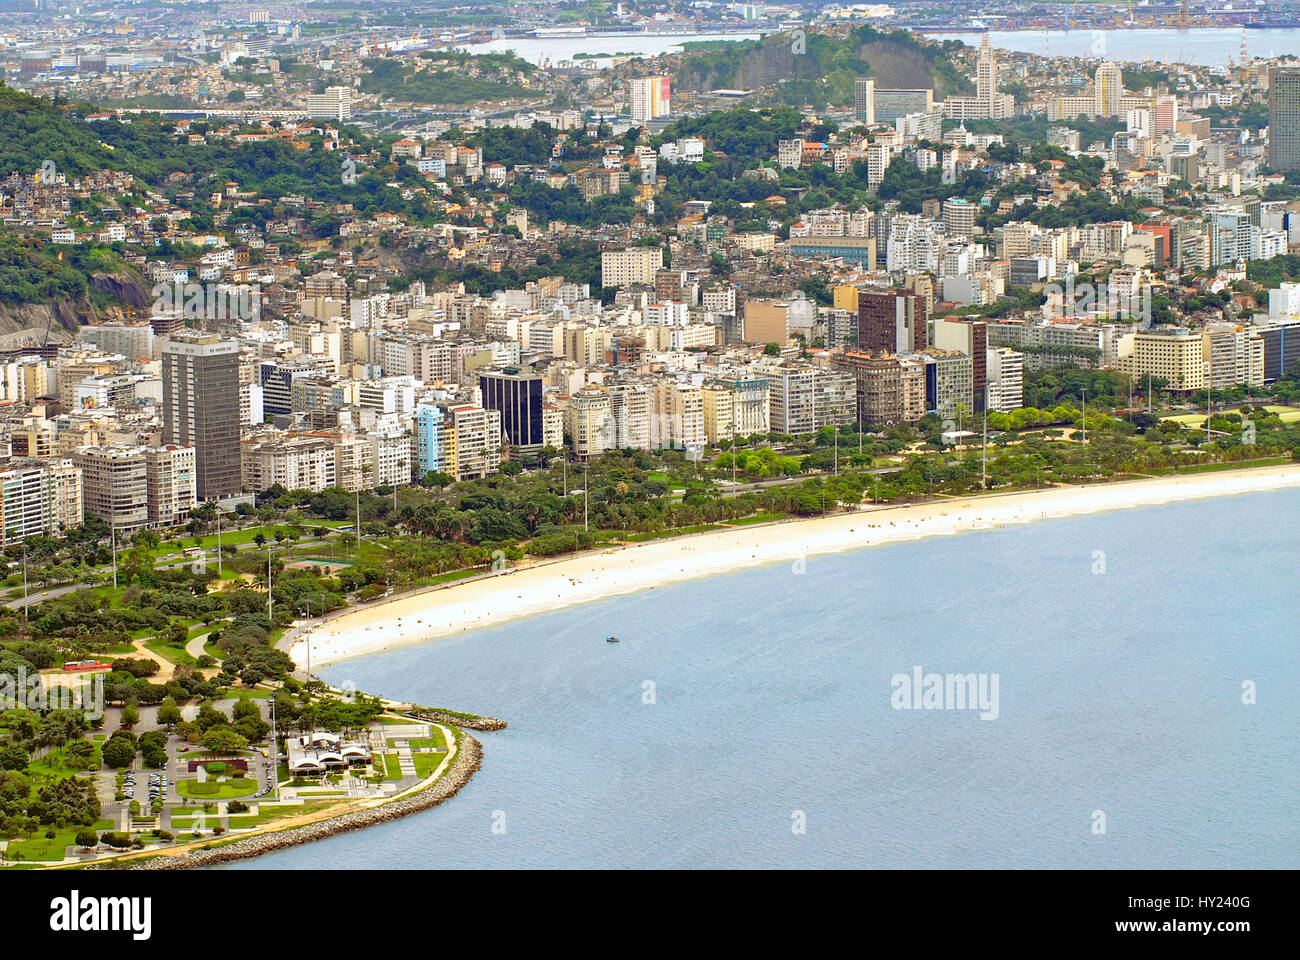 Image of the Beach of Gloria and the Parque do Flamengo in Rio de Janeiro, Brazil. Stock Photo